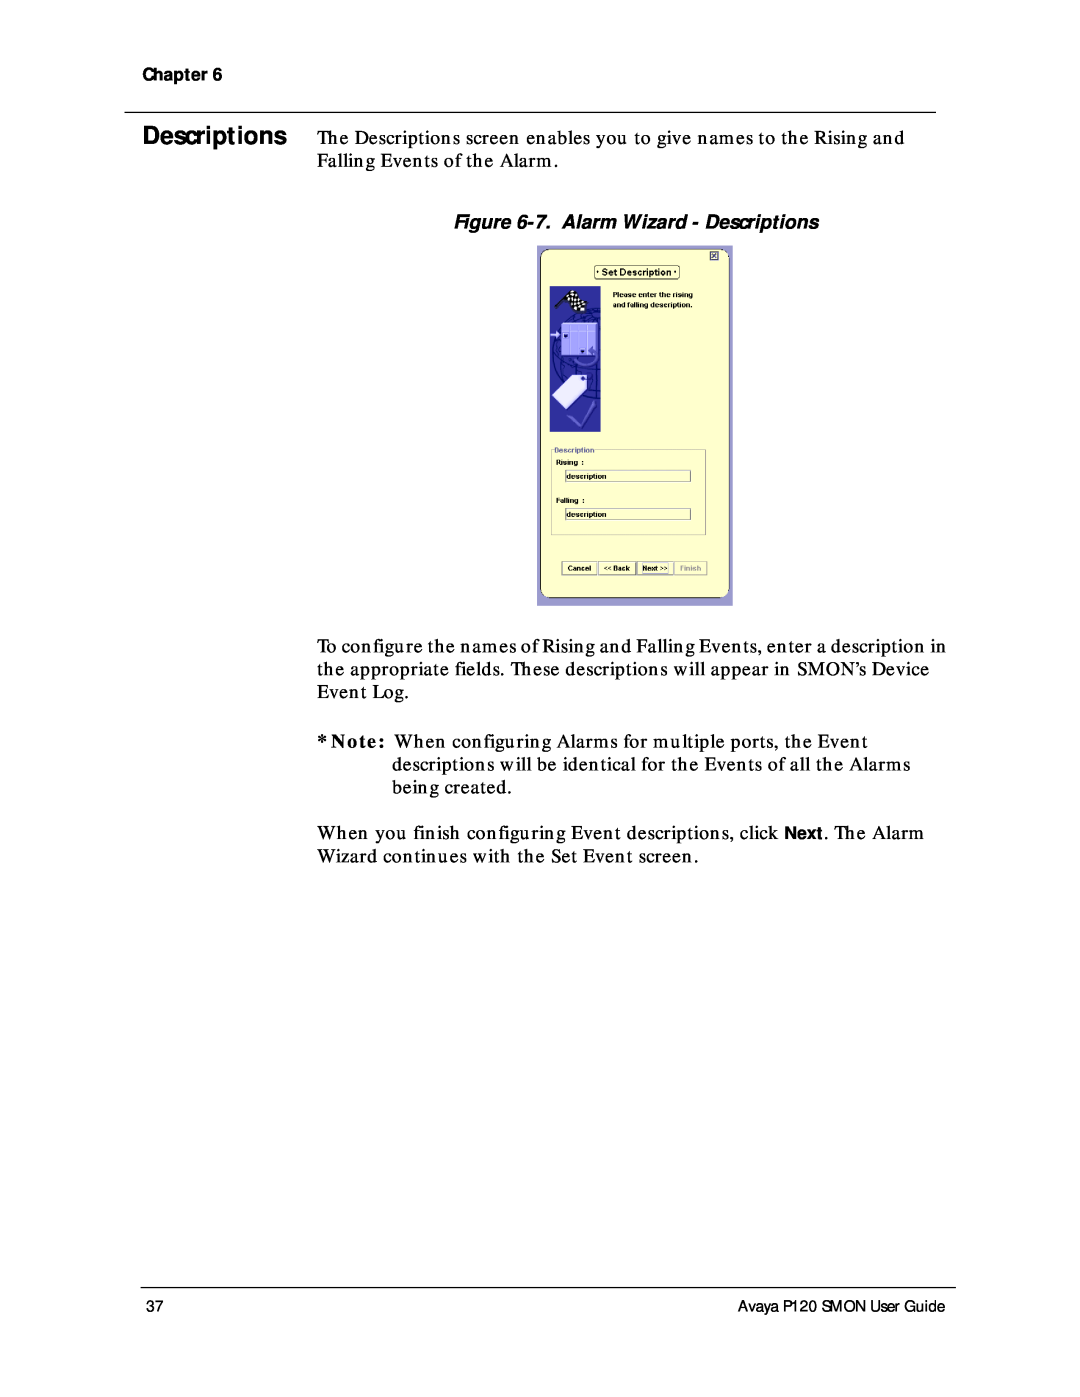 Avaya P120 SMON manual 7. Alarm Wizard - Descriptions 